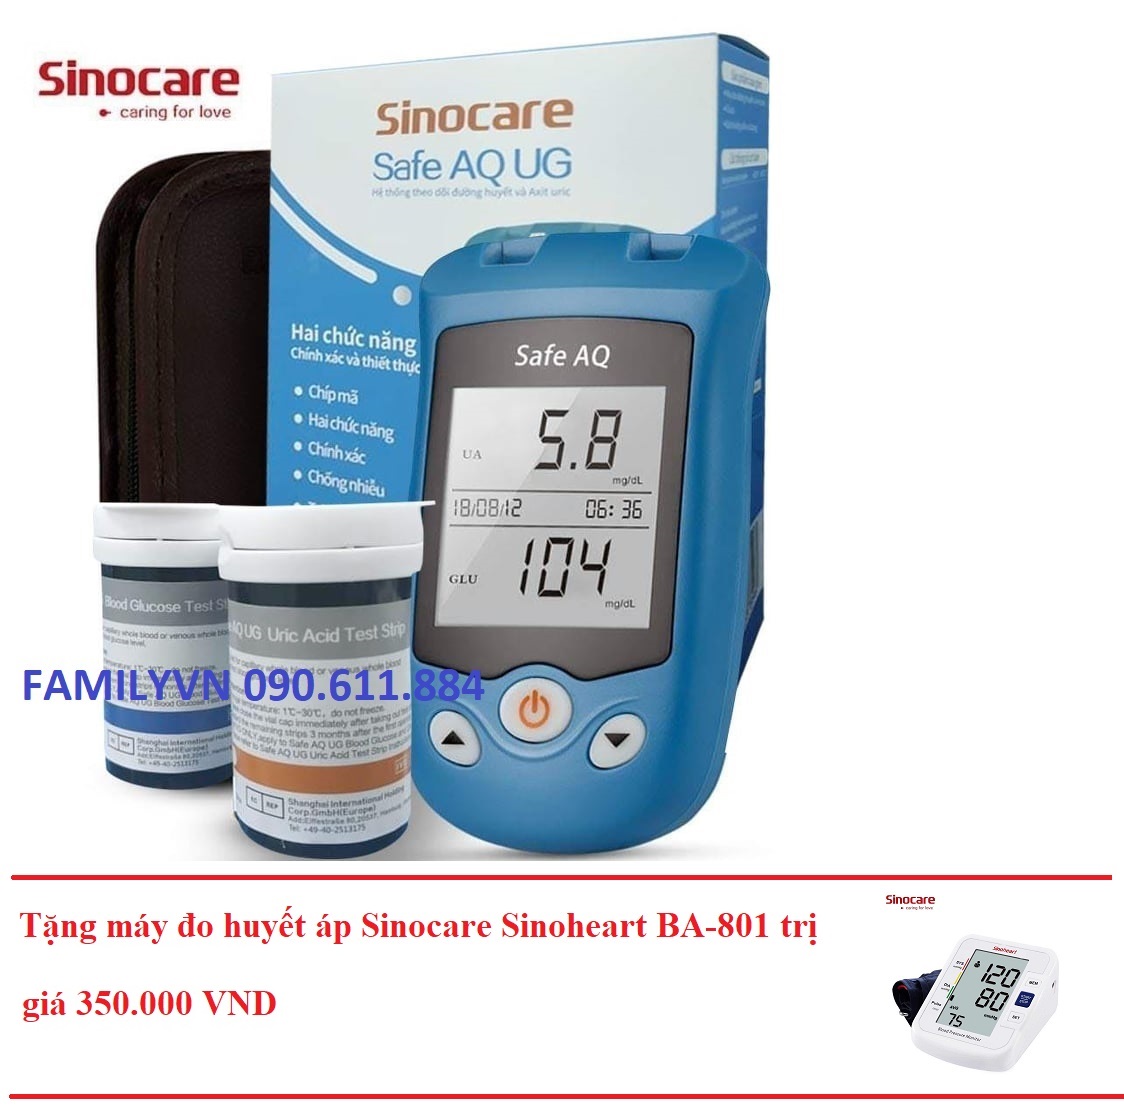 Máy đo đường huyết, Axit Uric 2 trong 1 Sinocare Safe AQ UG + Tặng máy đo